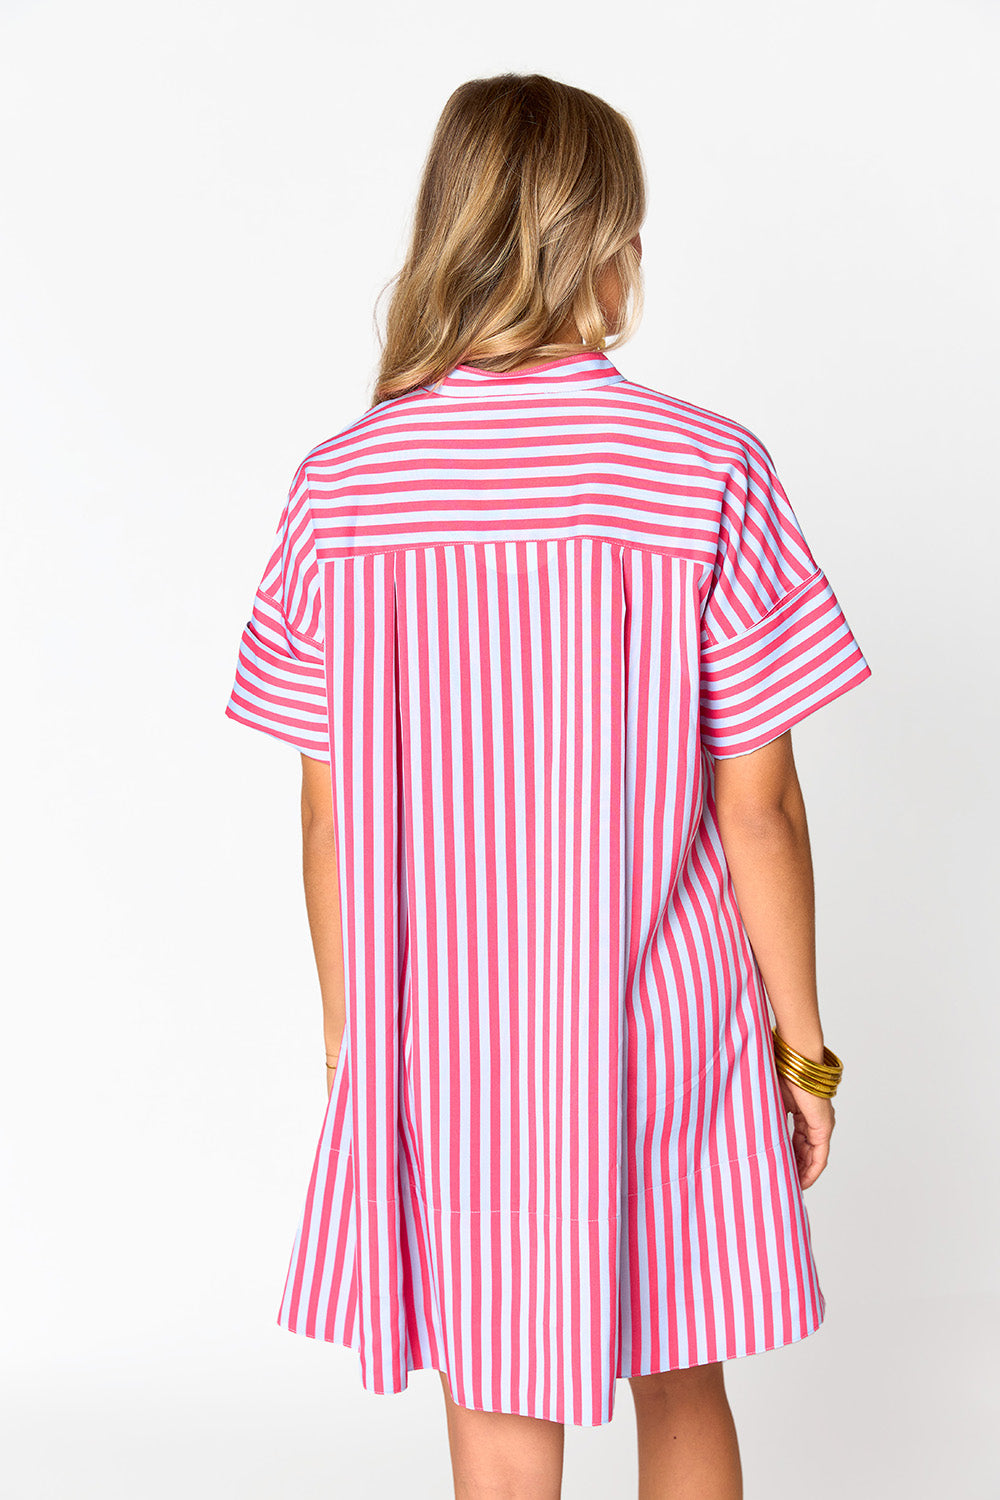 Striped Reverie Dress - Red